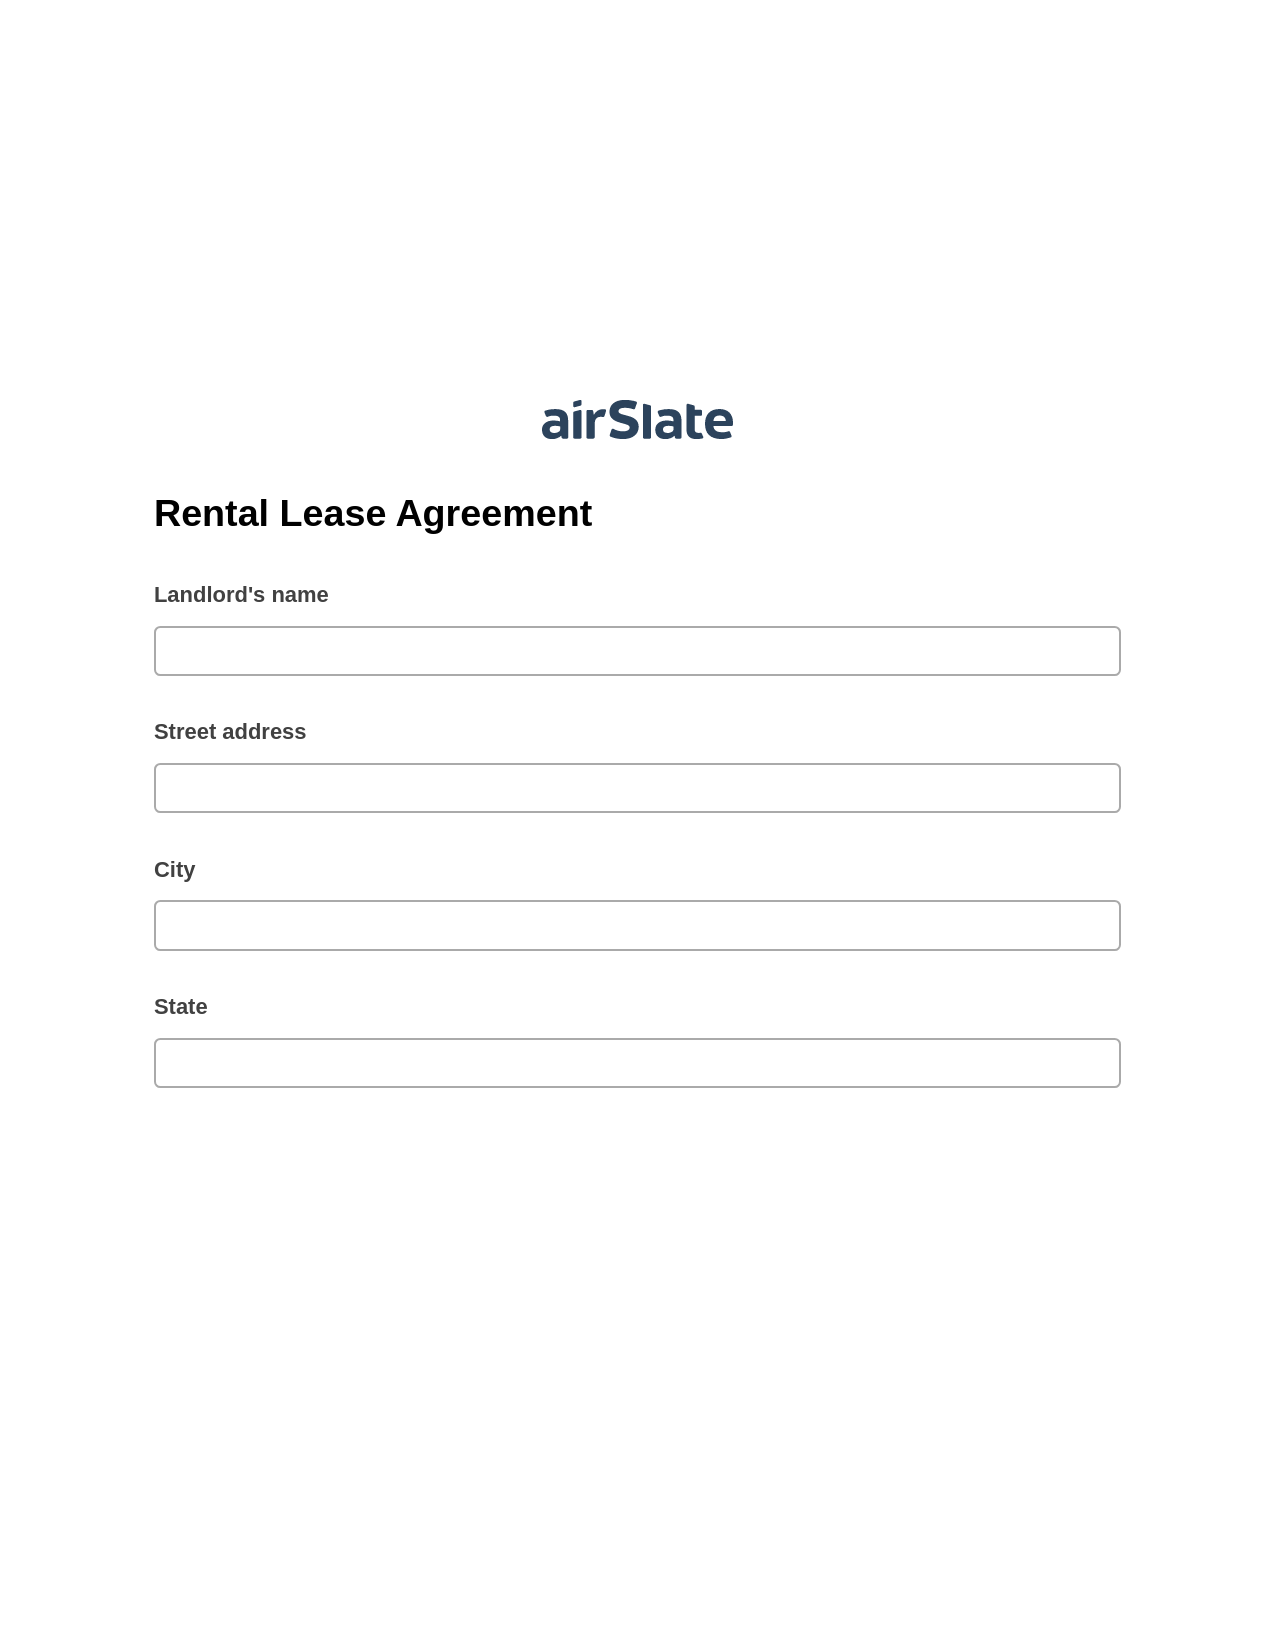 Rental Lease Agreement Pre-fill from Google Sheet Dropdown Options Bot, Slack Notification Bot, Box Bot